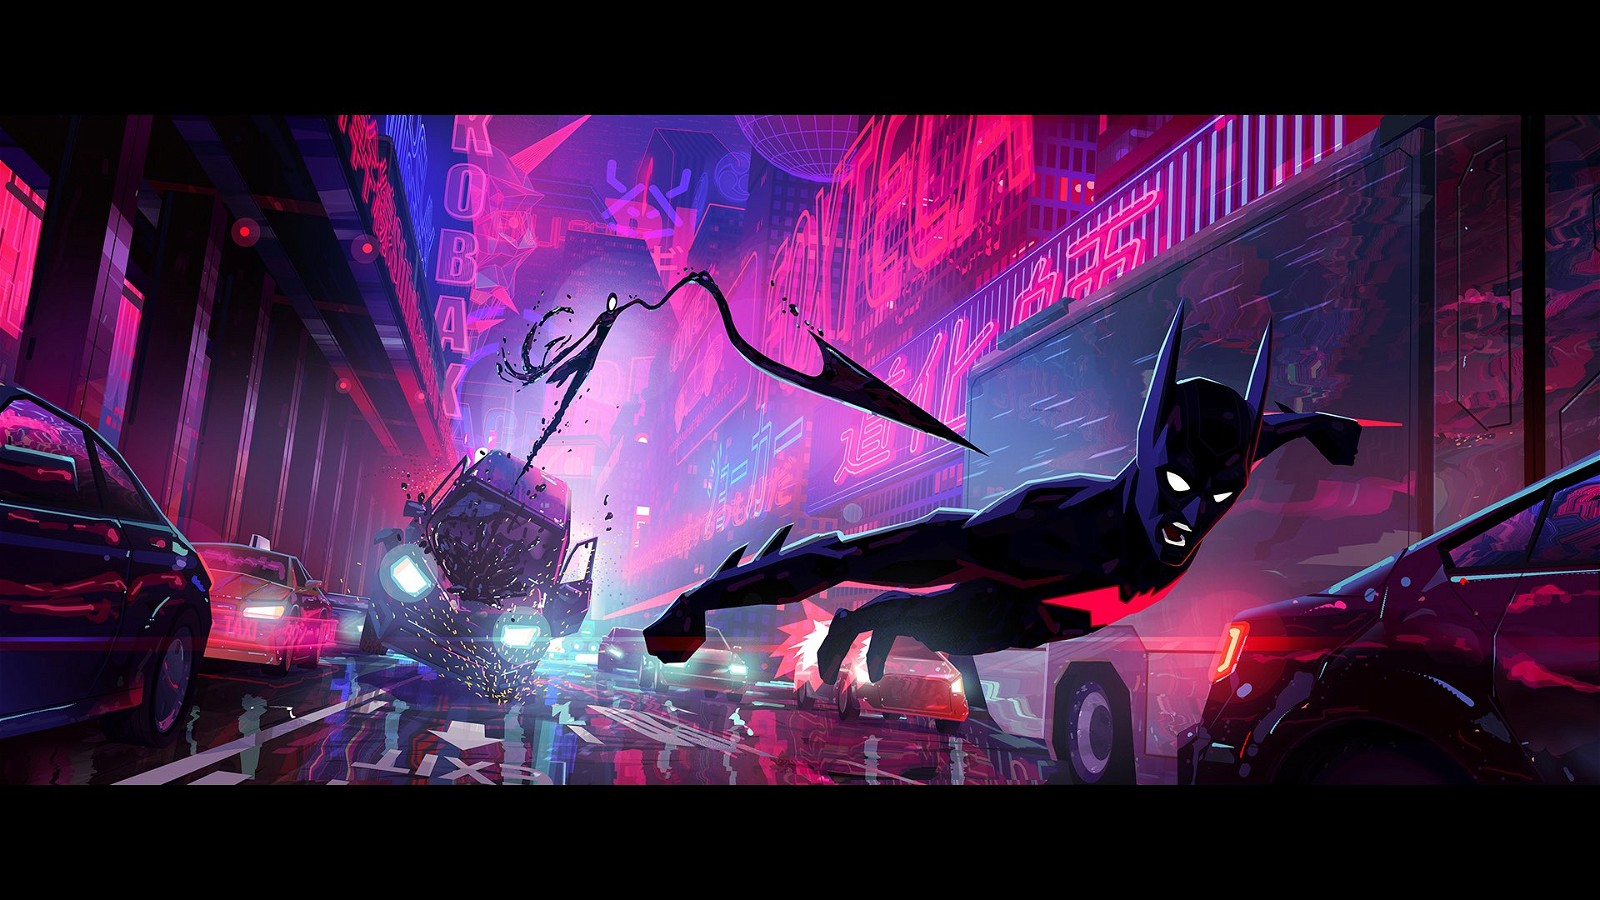 Patrick Harpin and Yuhki Demers's concept art for <em>Batman Beyond</em>